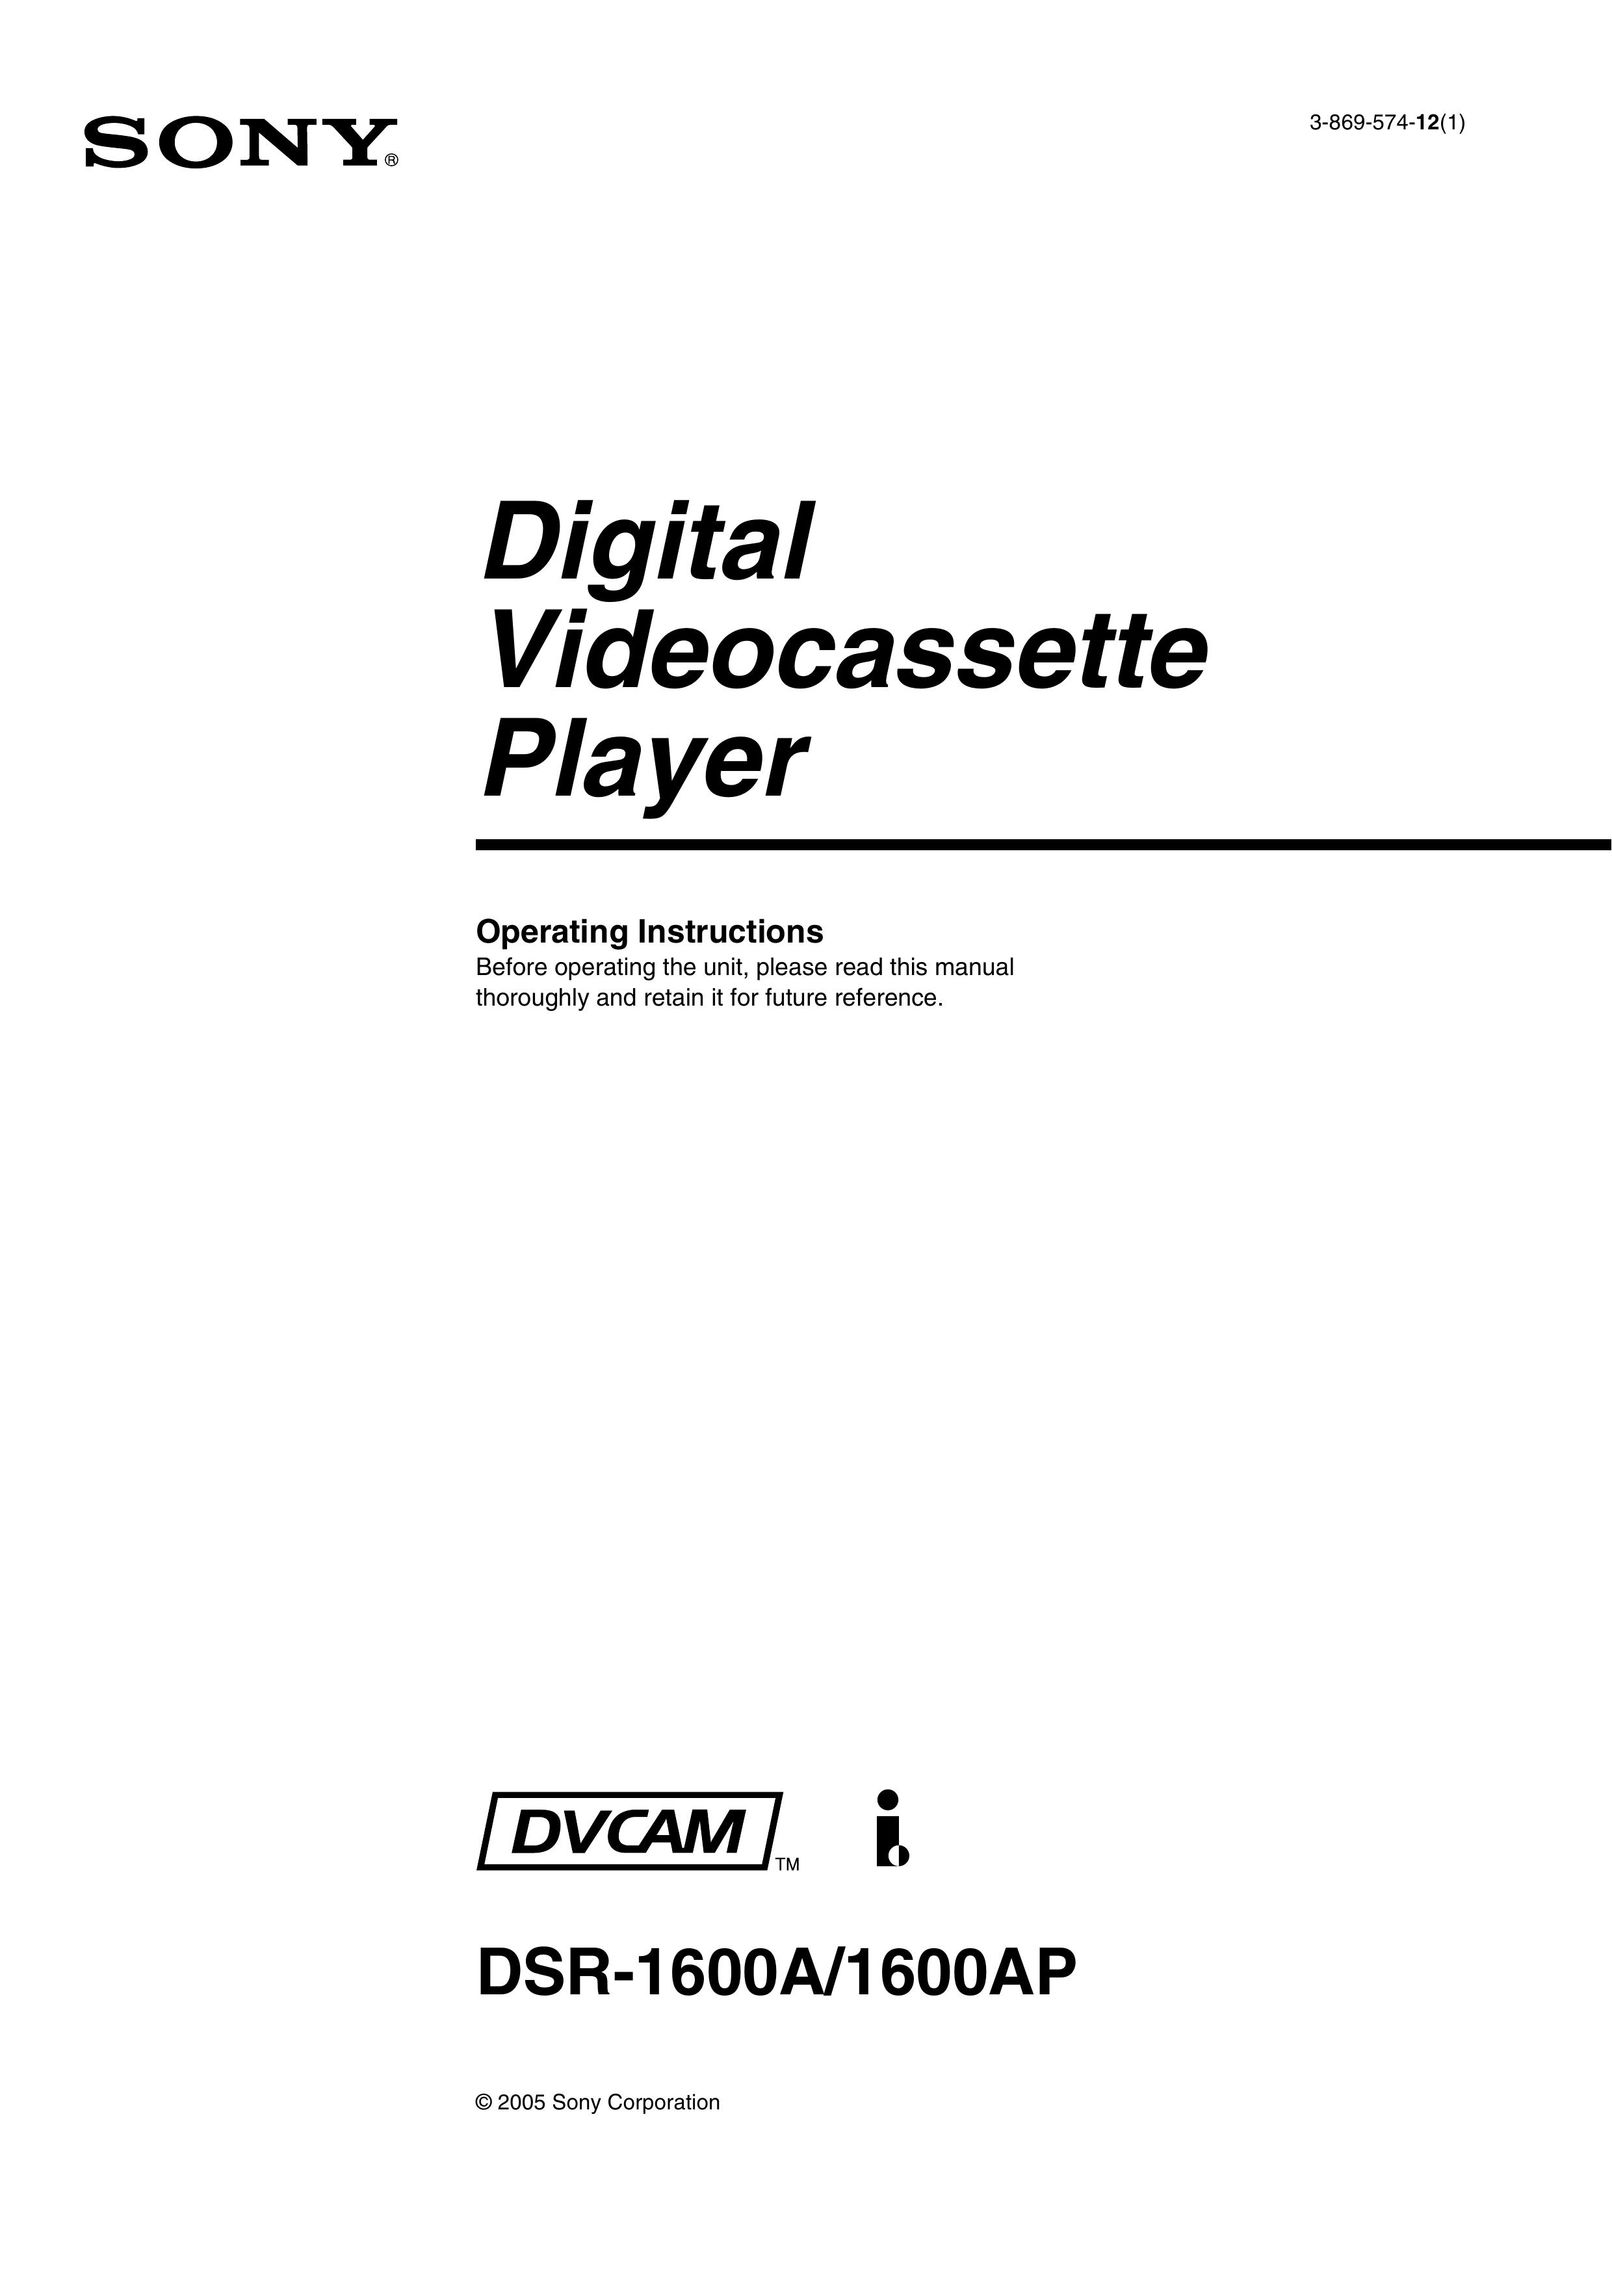 Sony DSR-1600A VCR User Manual